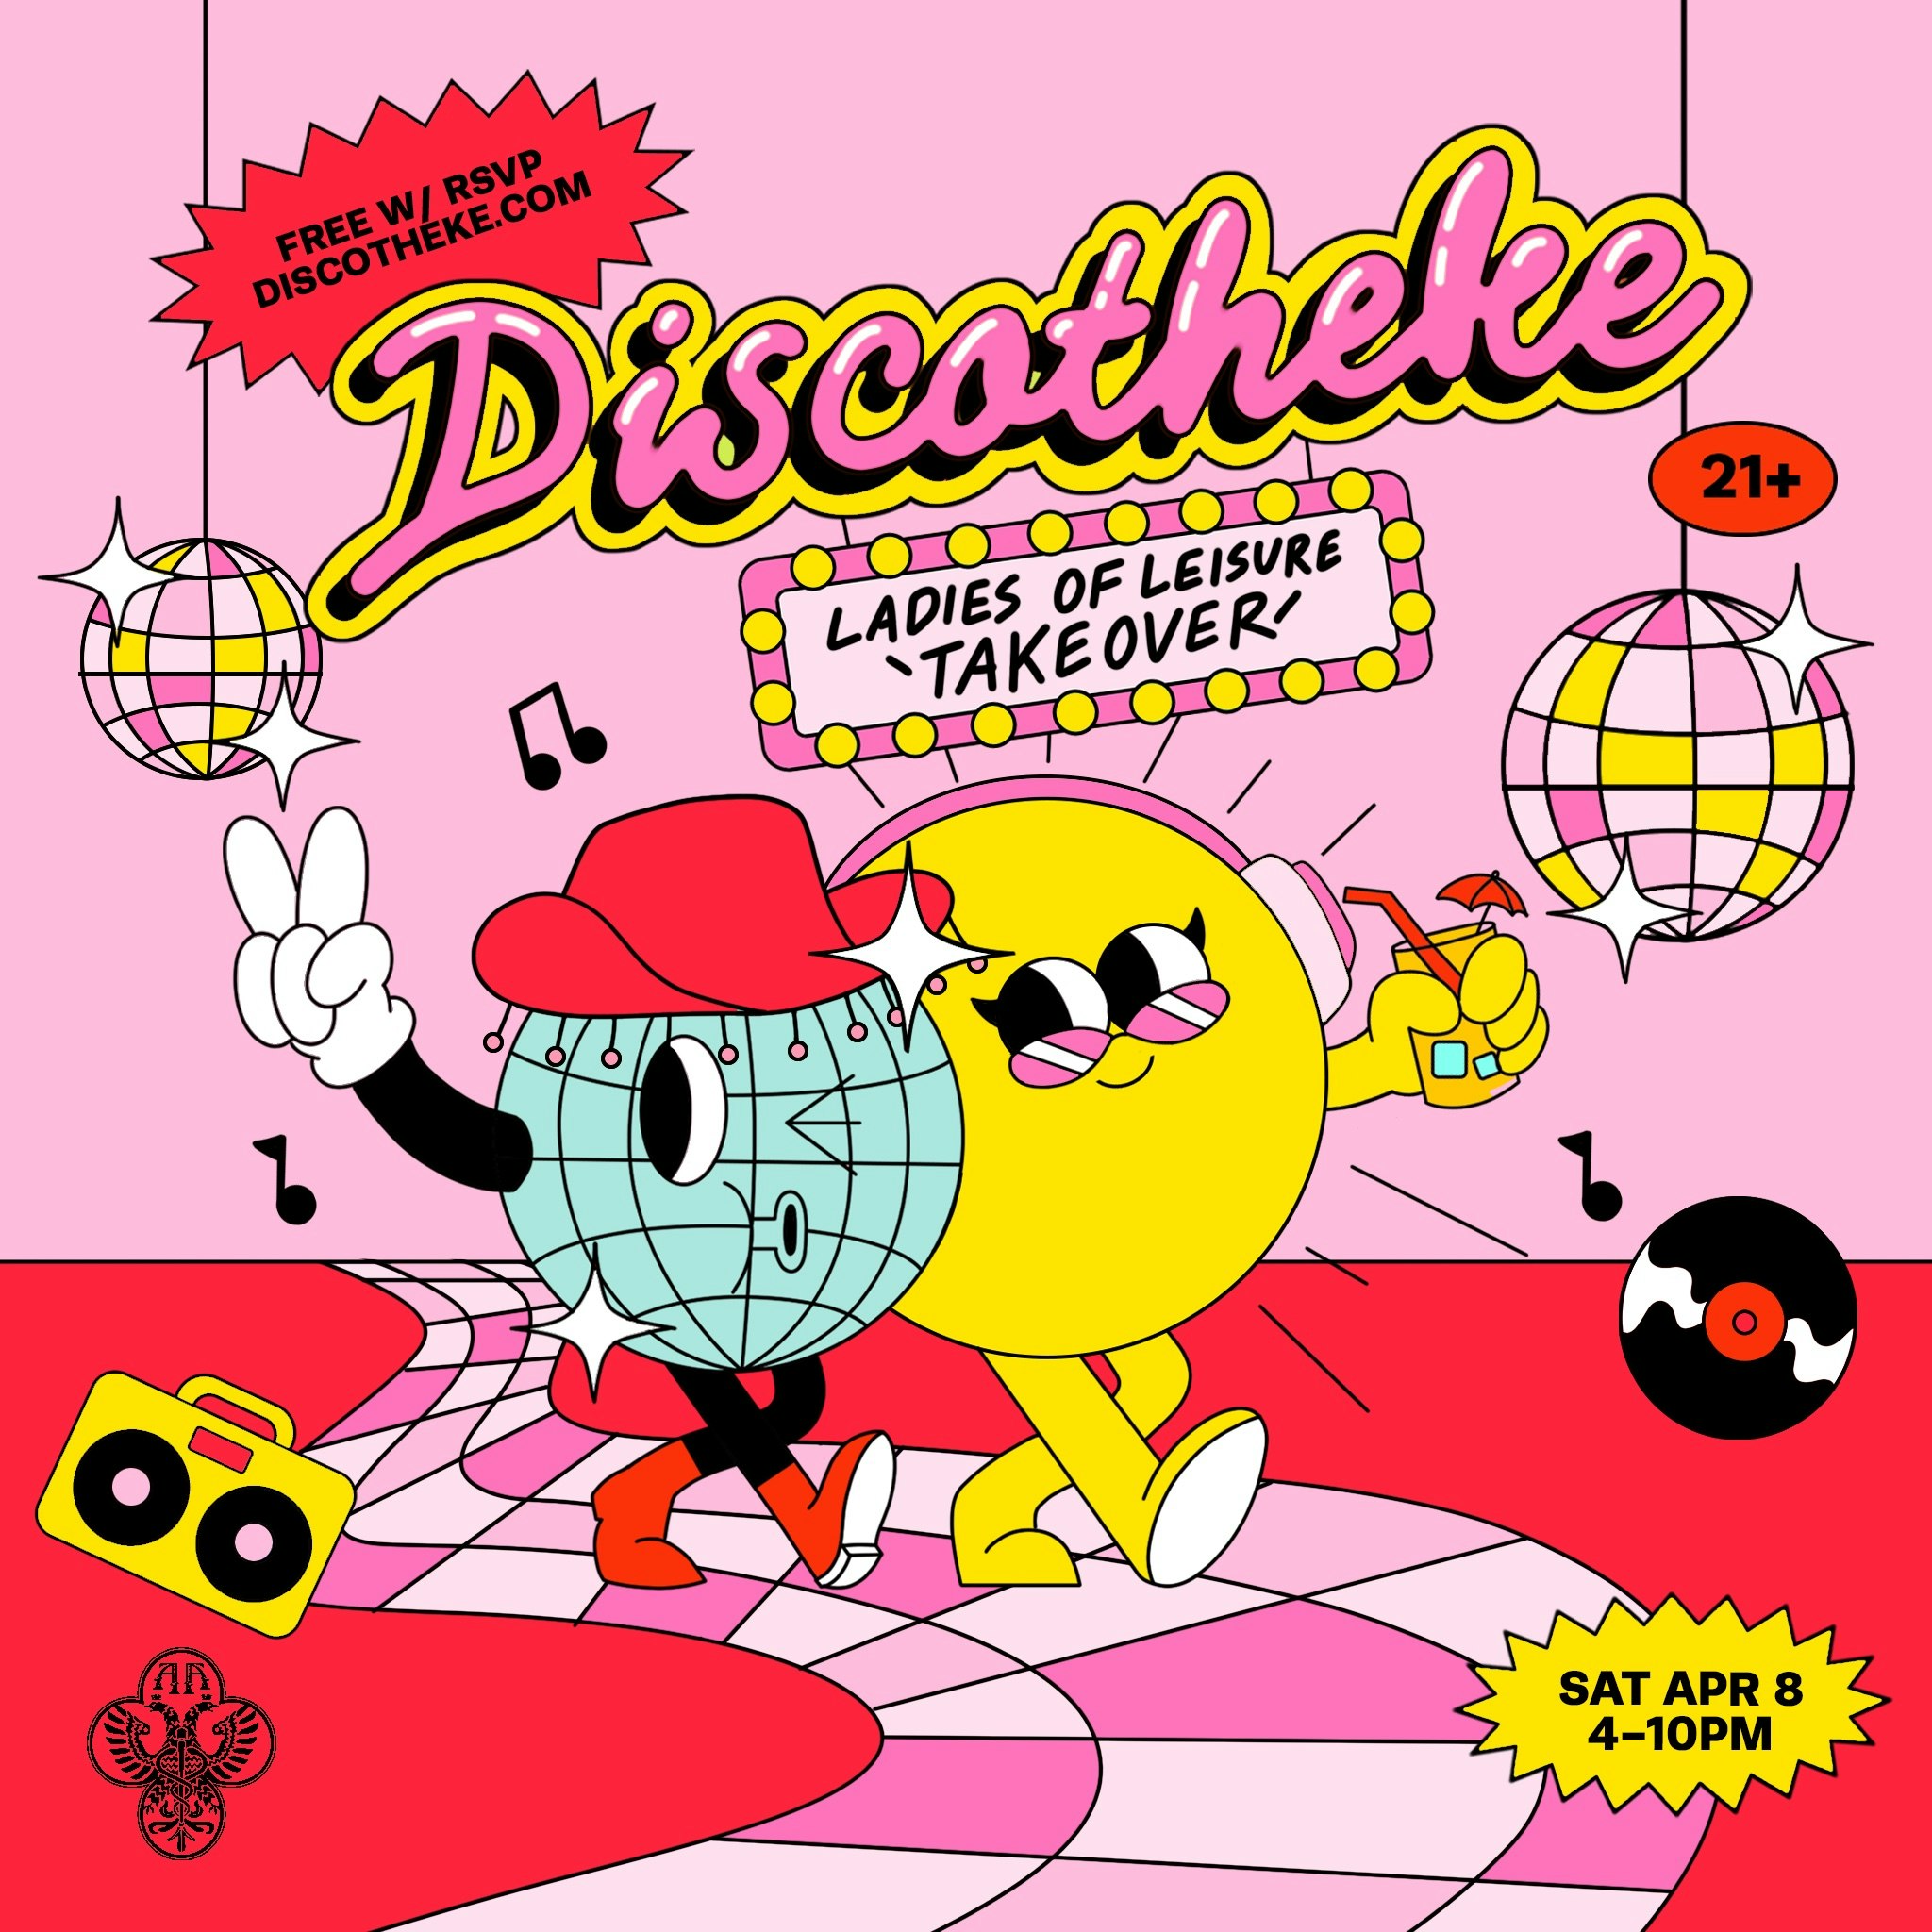 Discotheke - Ladies Of Leisure Takeover